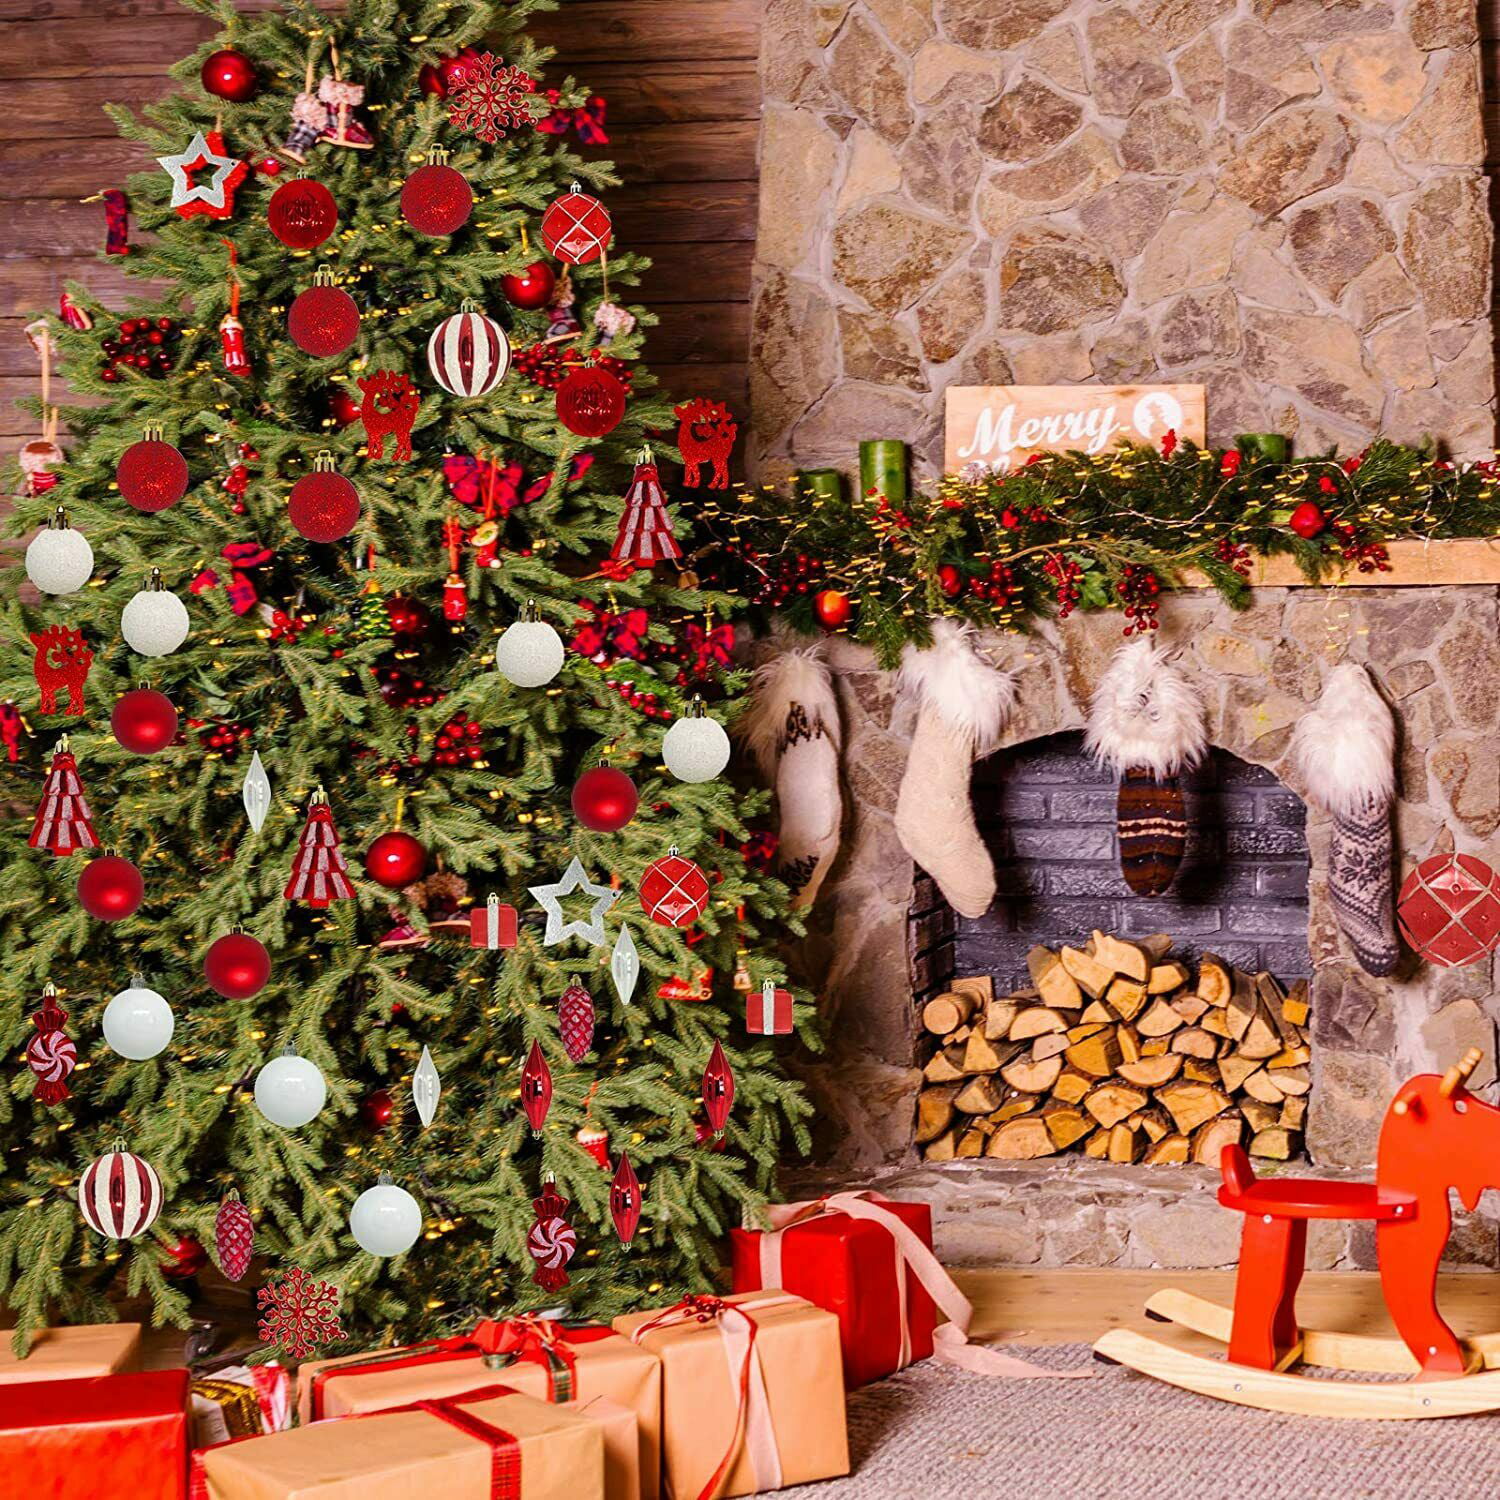 88 Piece Assorted Christmas Tree Ornaments Set Shatterproof Balls for Christmas 